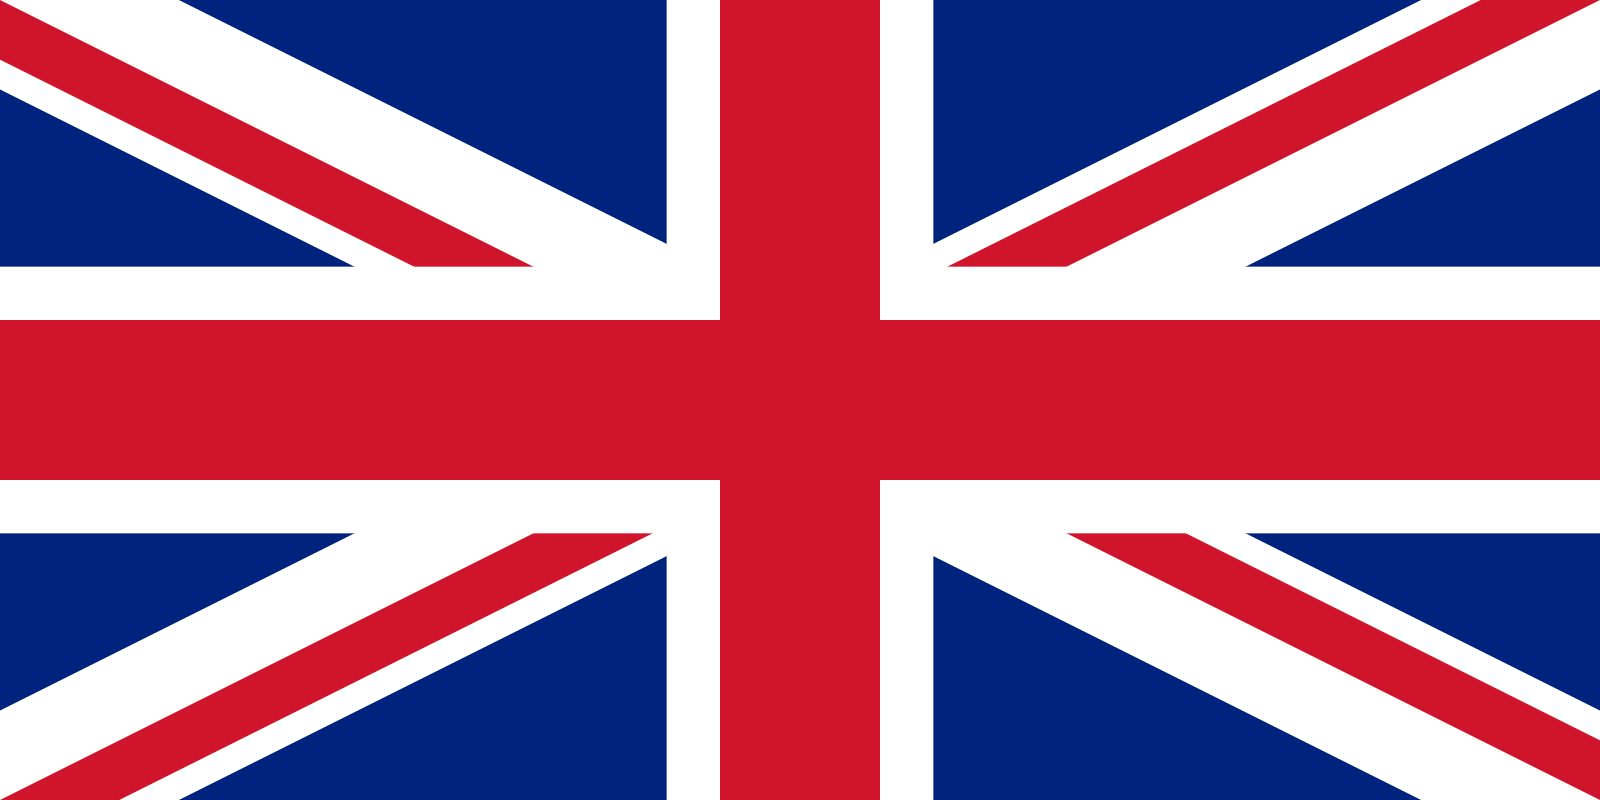 Jakou má Anglie vlajku?